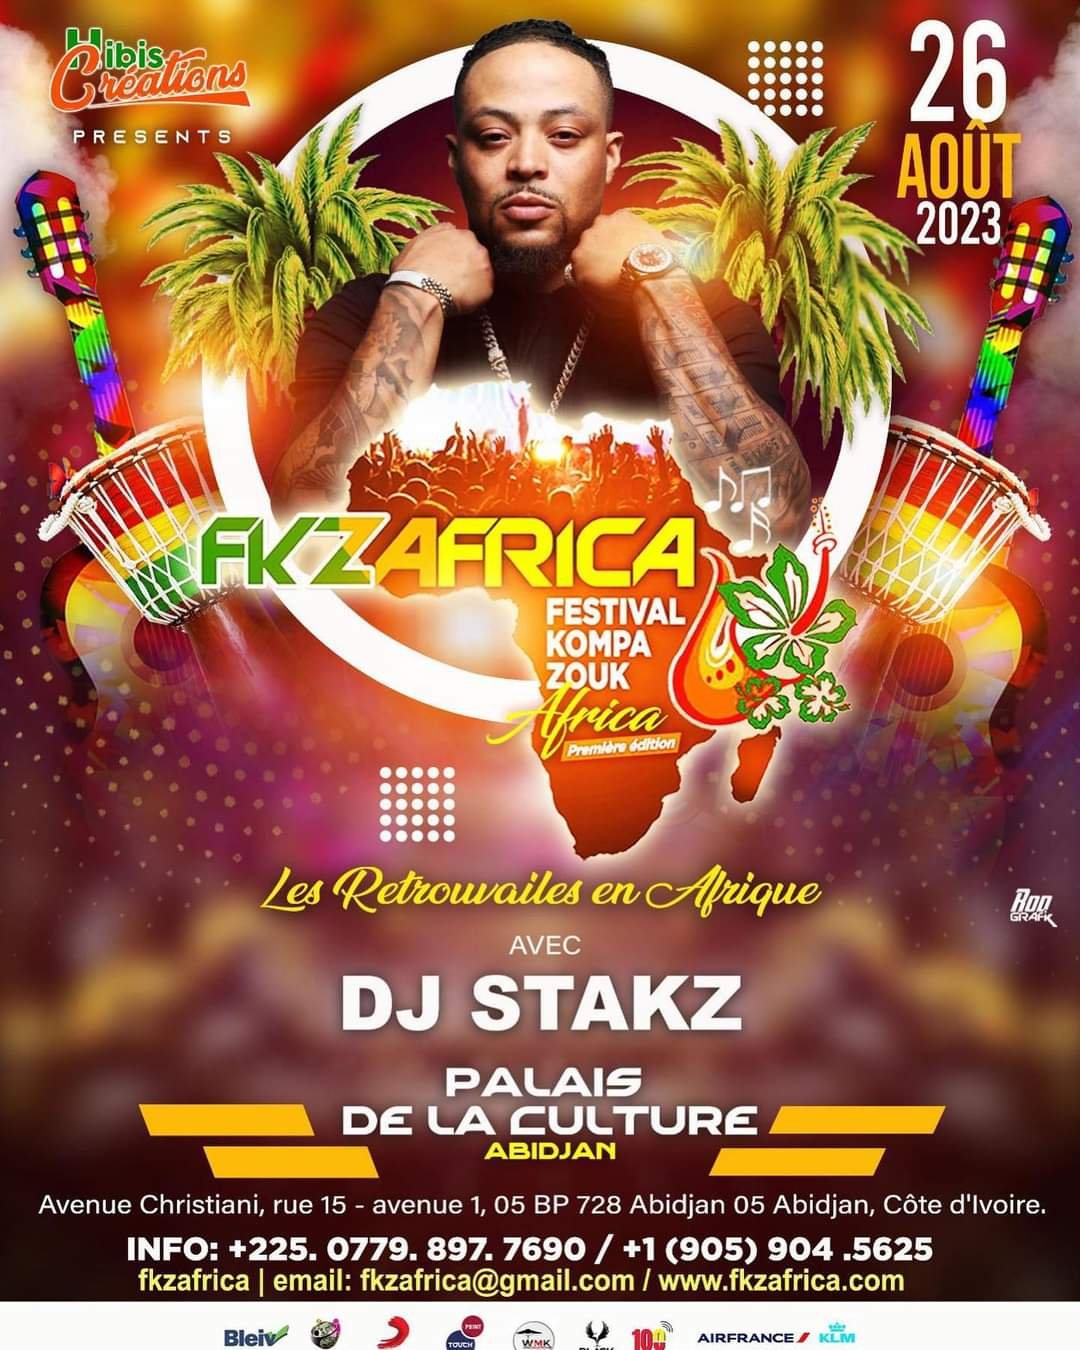 FKZ Africa Festival Kompa Zouk - DJ Stakz - August 26.jpg